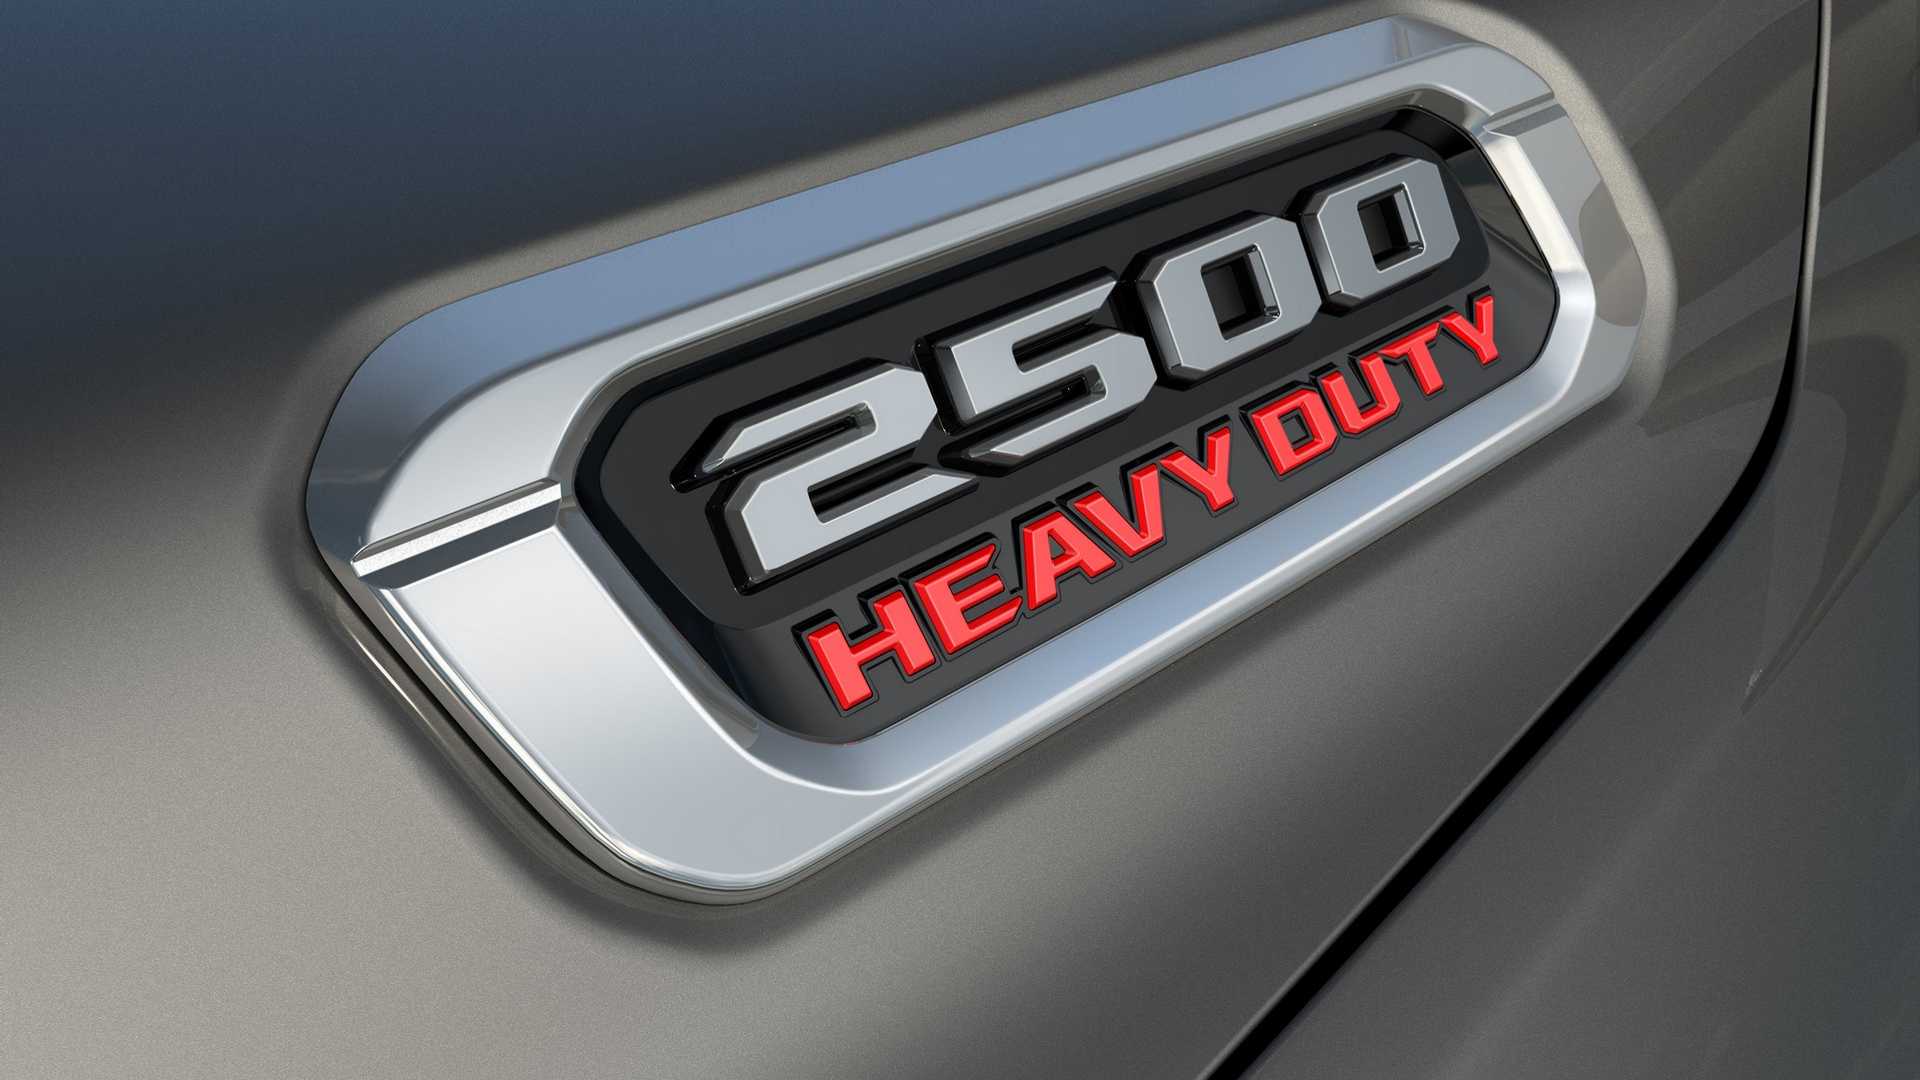 2019 Ram 2500 Heavy Duty Badge Wallpapers #23 of 36